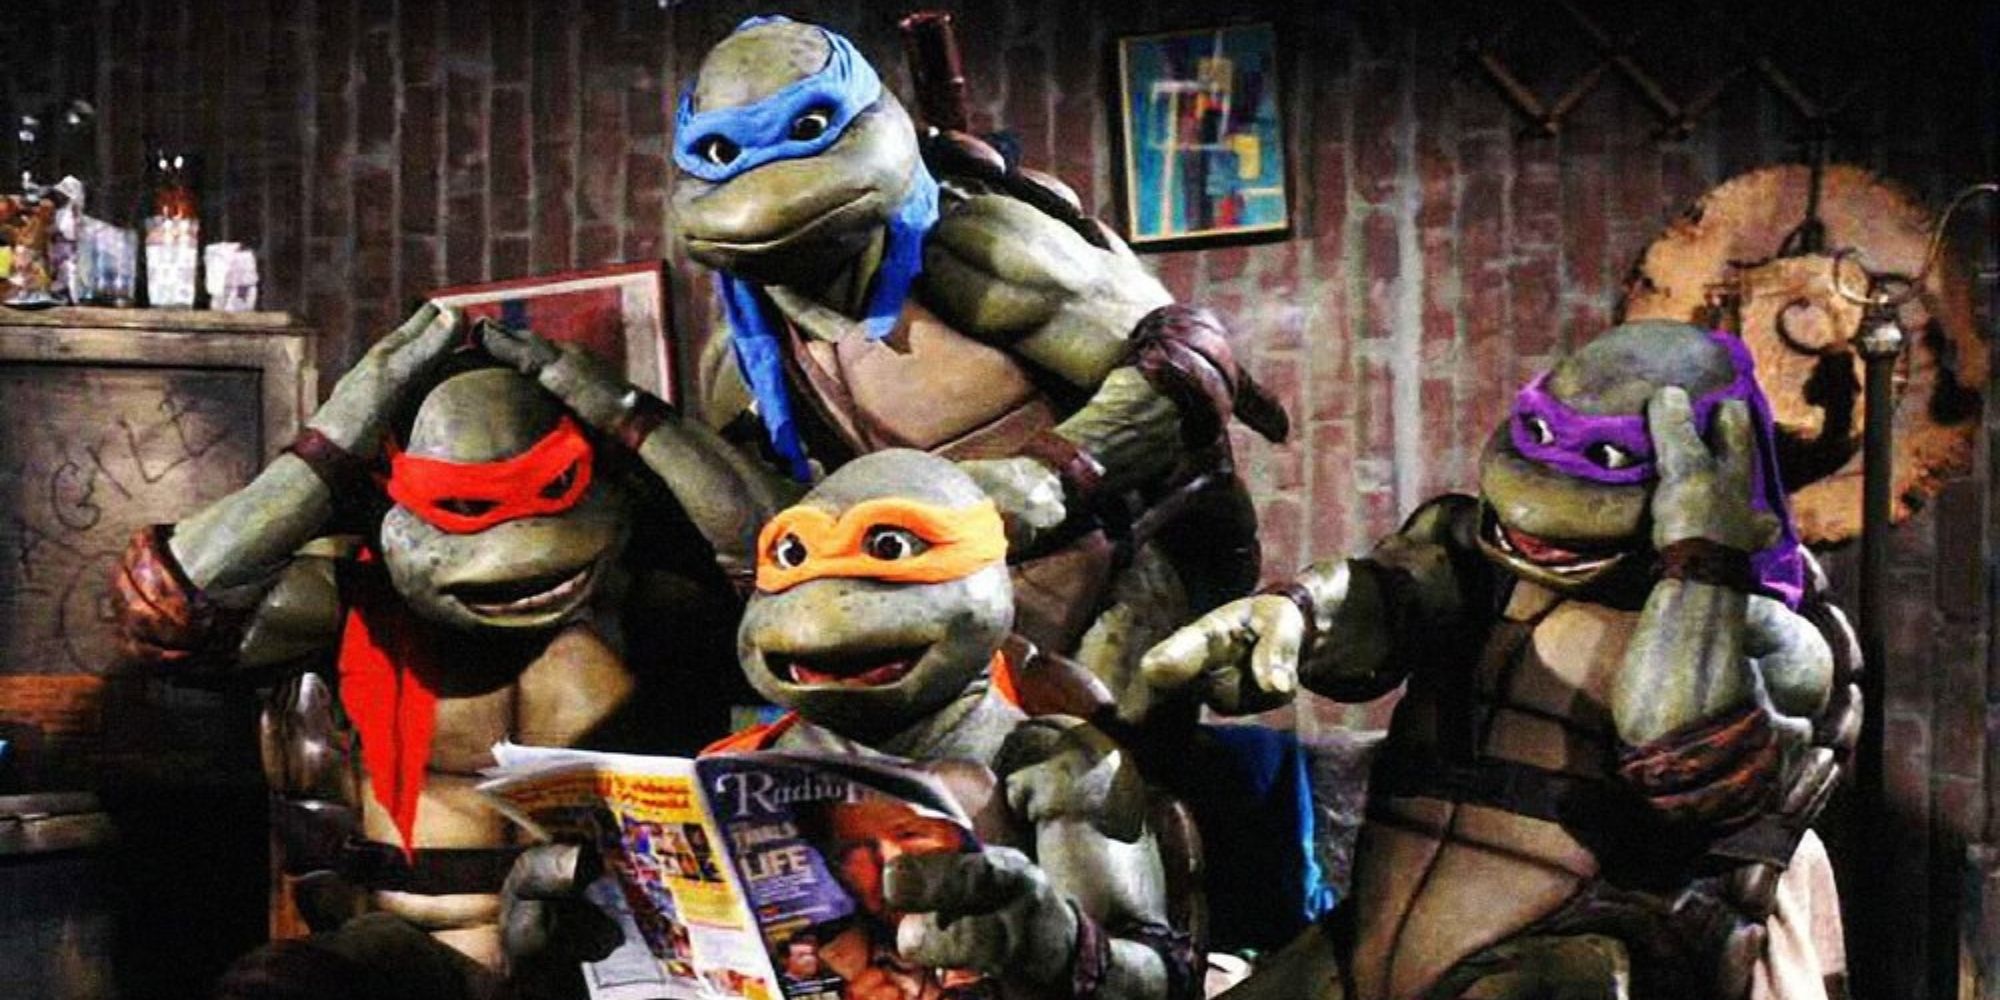 The Turtles in Teenage Mutant Ninja Turtles